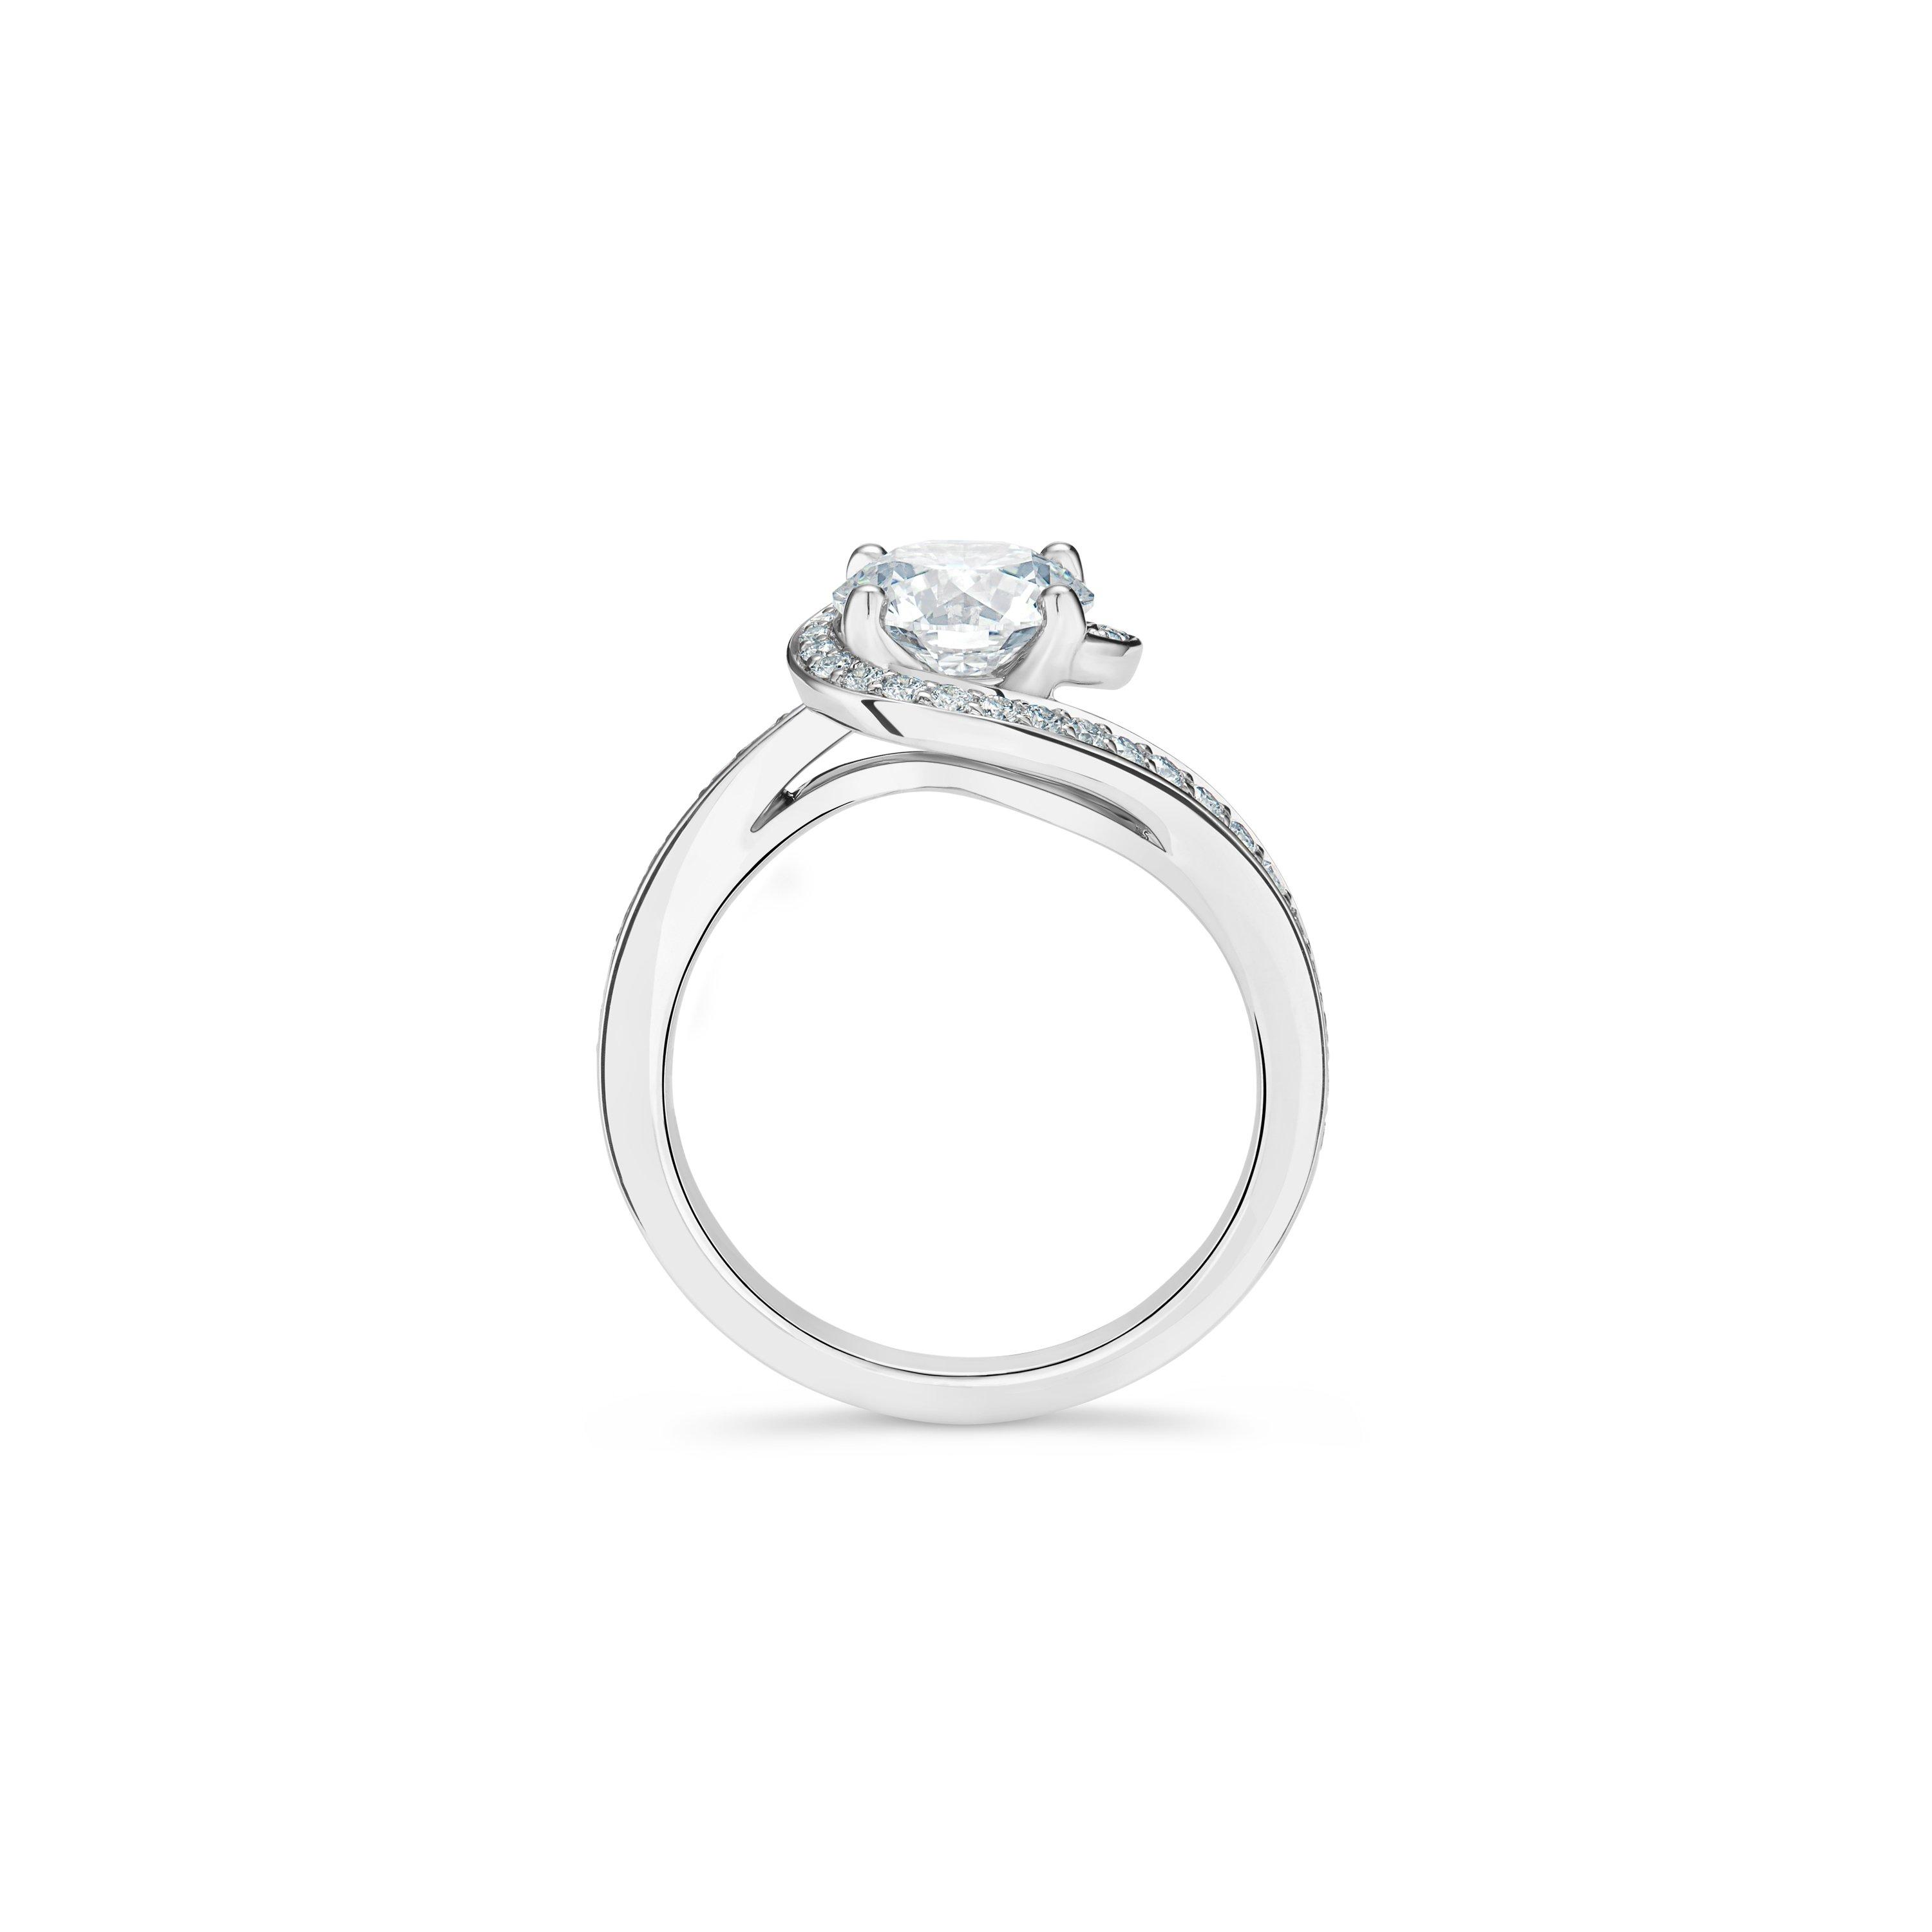 Caress diamond solitaire engagement ring, De Beers